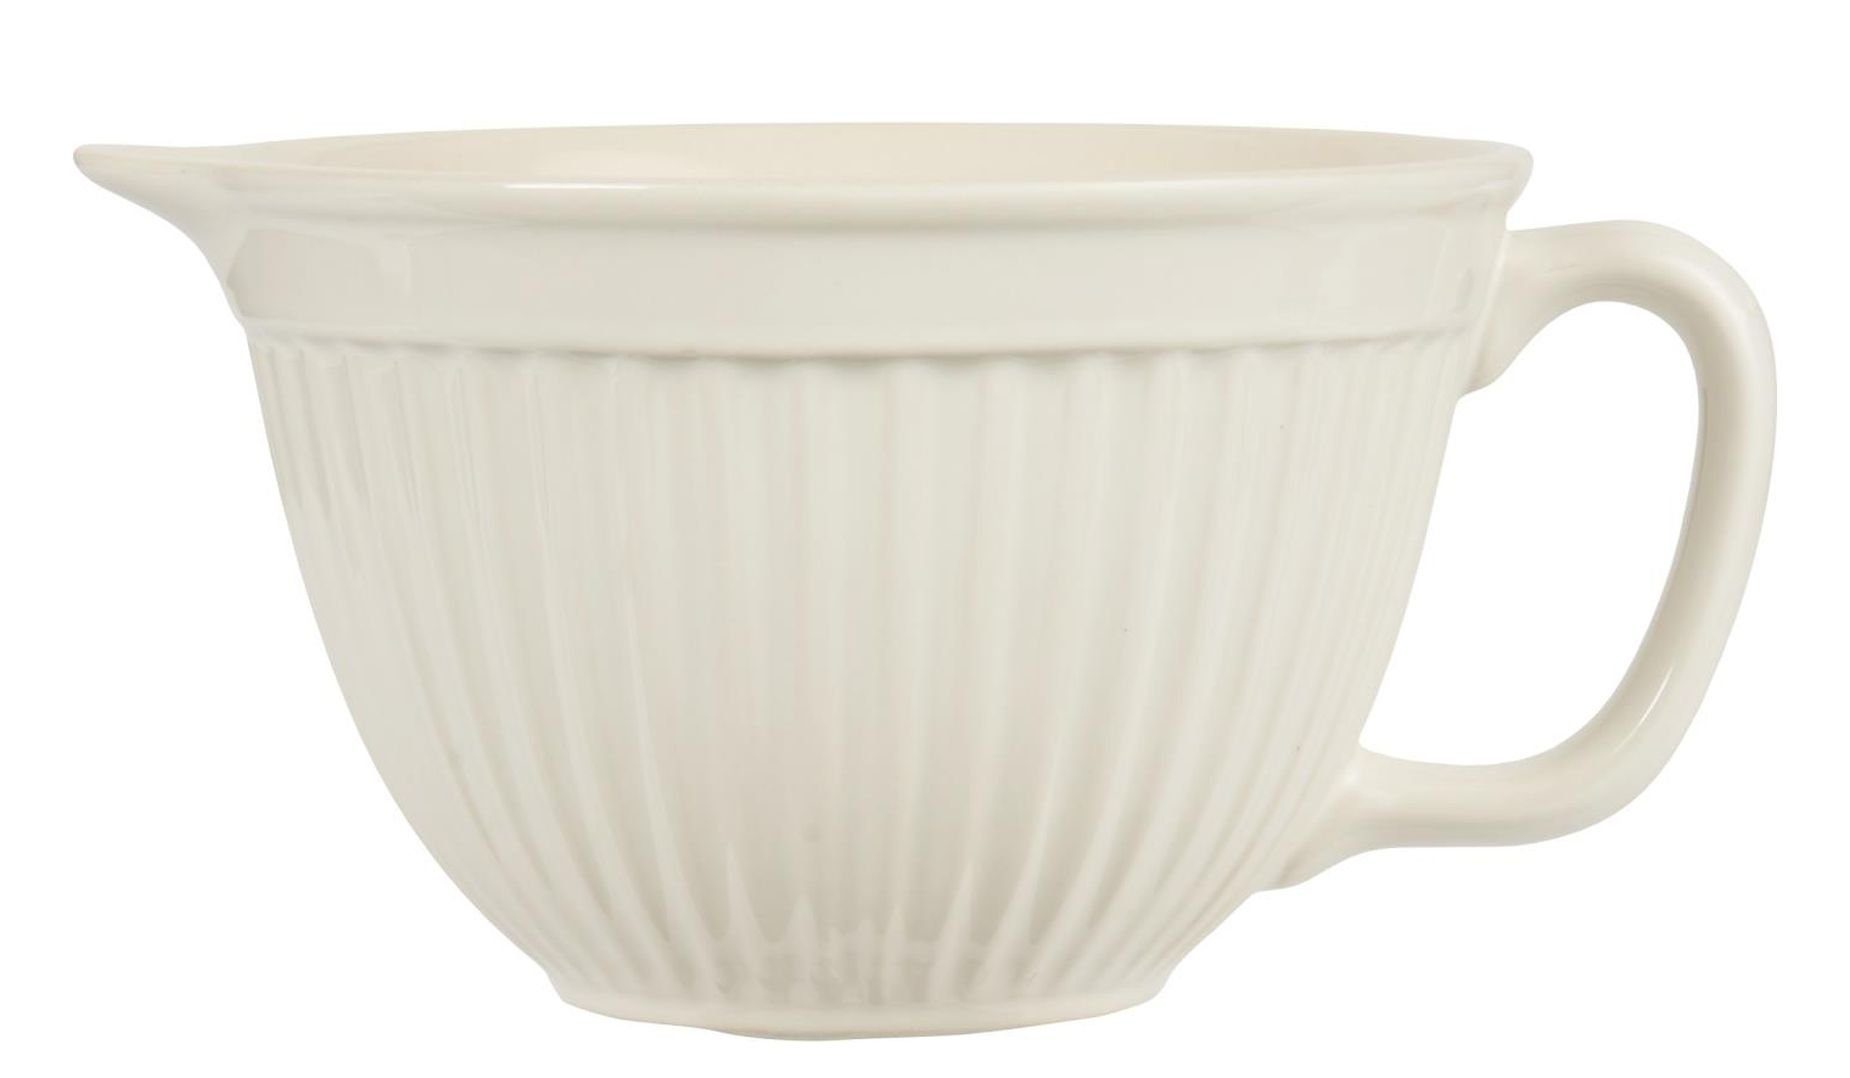 Ib Laursen - Laursen Keramik Keramik Schüssel, Butter Cream 1,5l (2075) Rührschüssel Mynte Farbauswahl Rührschüssel